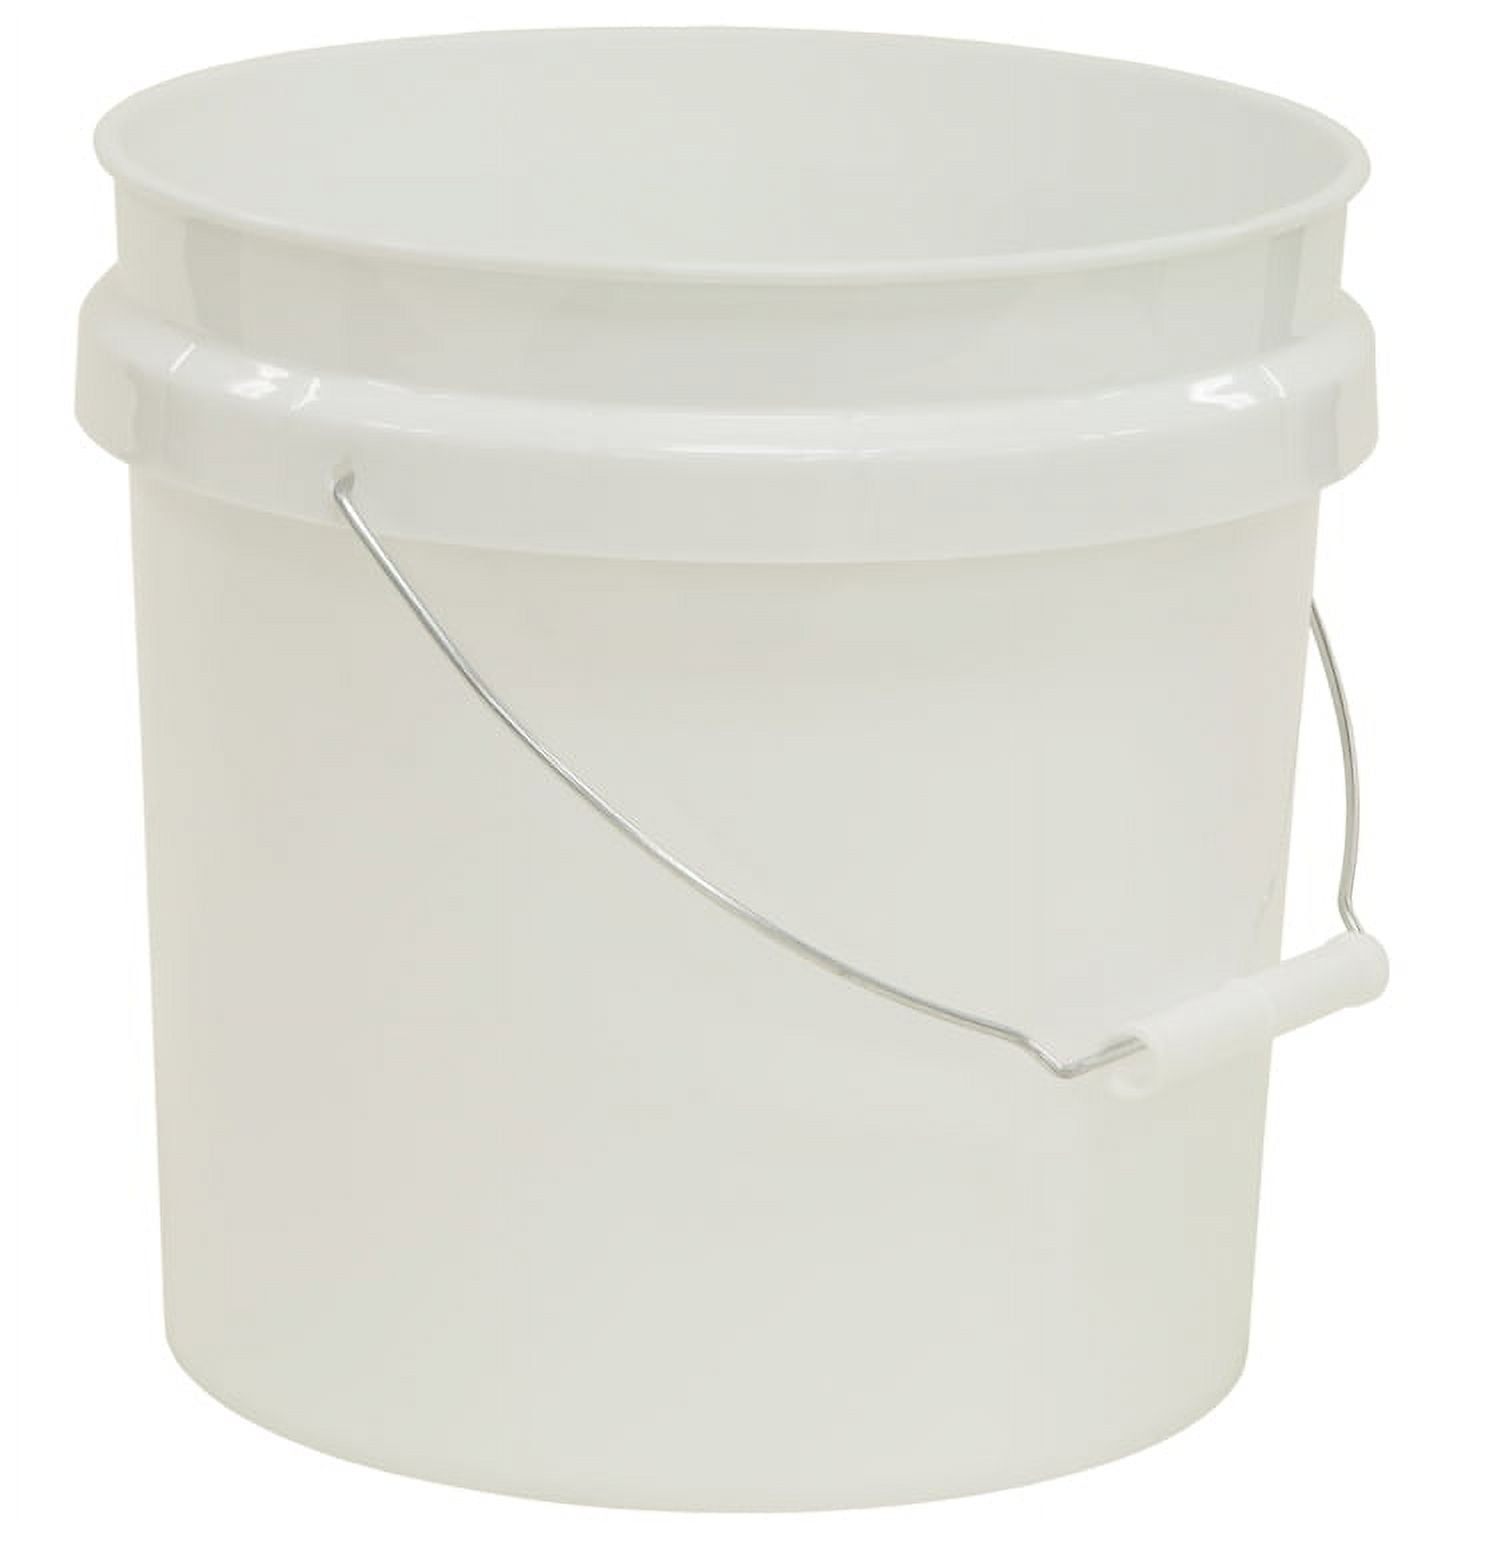 2 Gallon Plastic Bucket